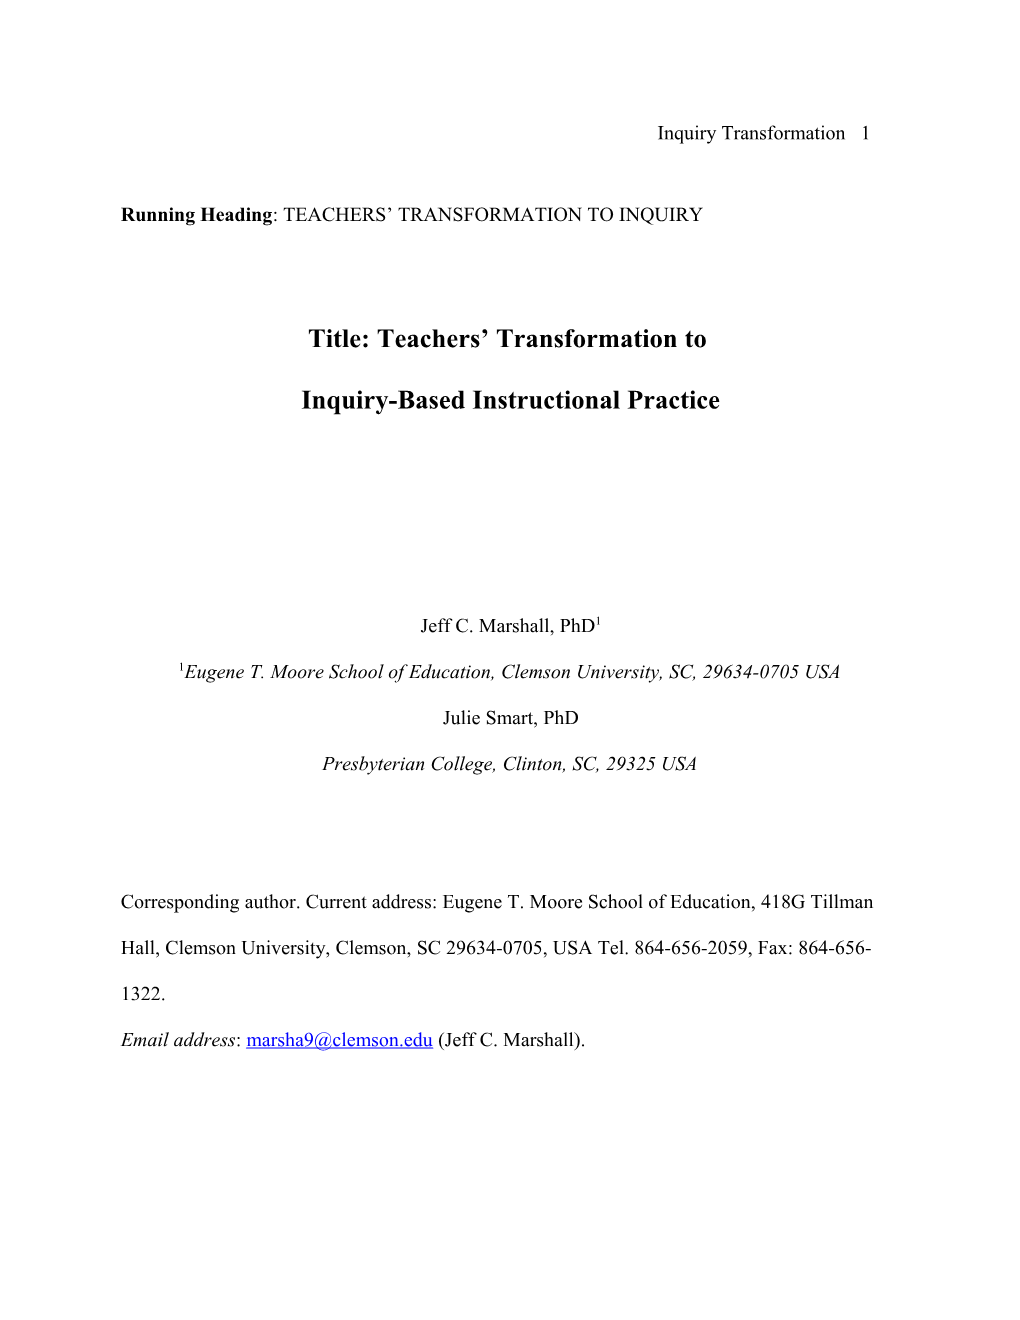 Running Heading: TEACHERS TRANSFORMATION to INQUIRY